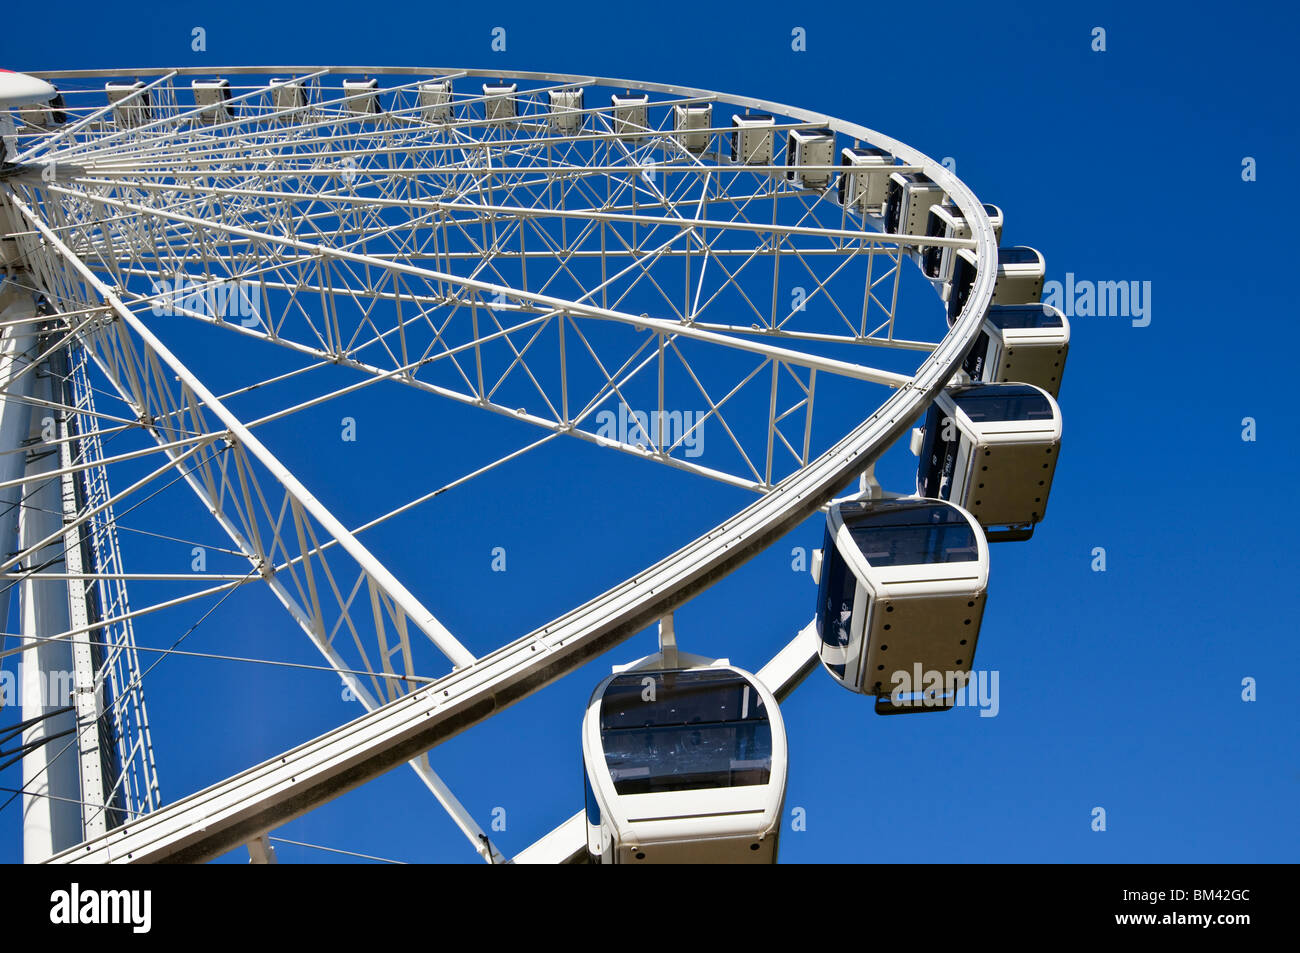 The Wheel of Brisbane - a 60 metre high ferris wheel overlooking South Bank Parklands. Brisbane, Queensland, Australia Stock Photo